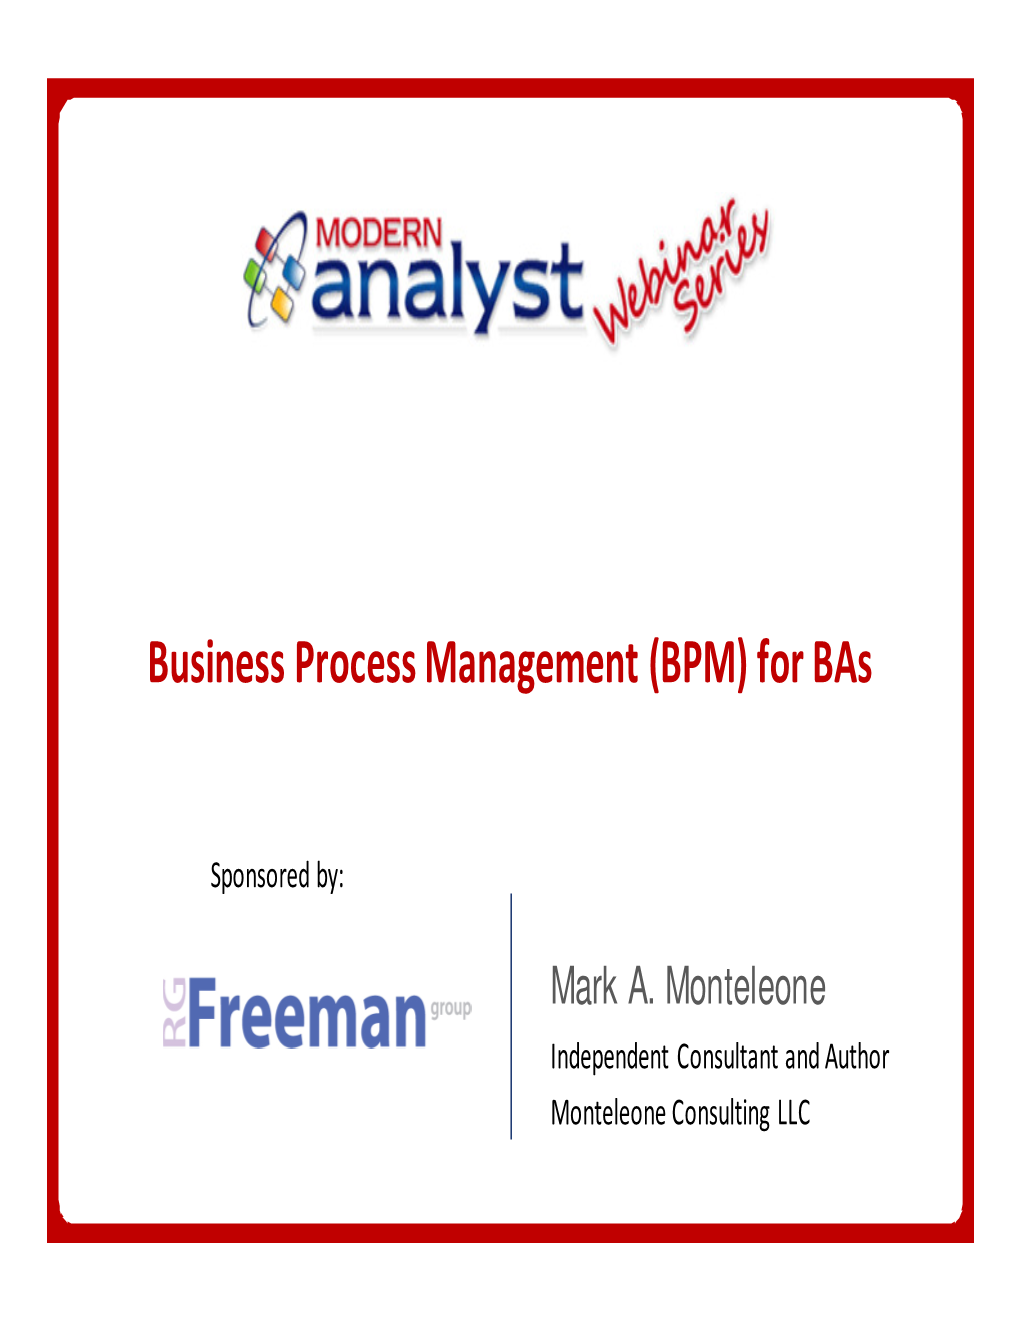 Business Process Management (BPM) for Bas